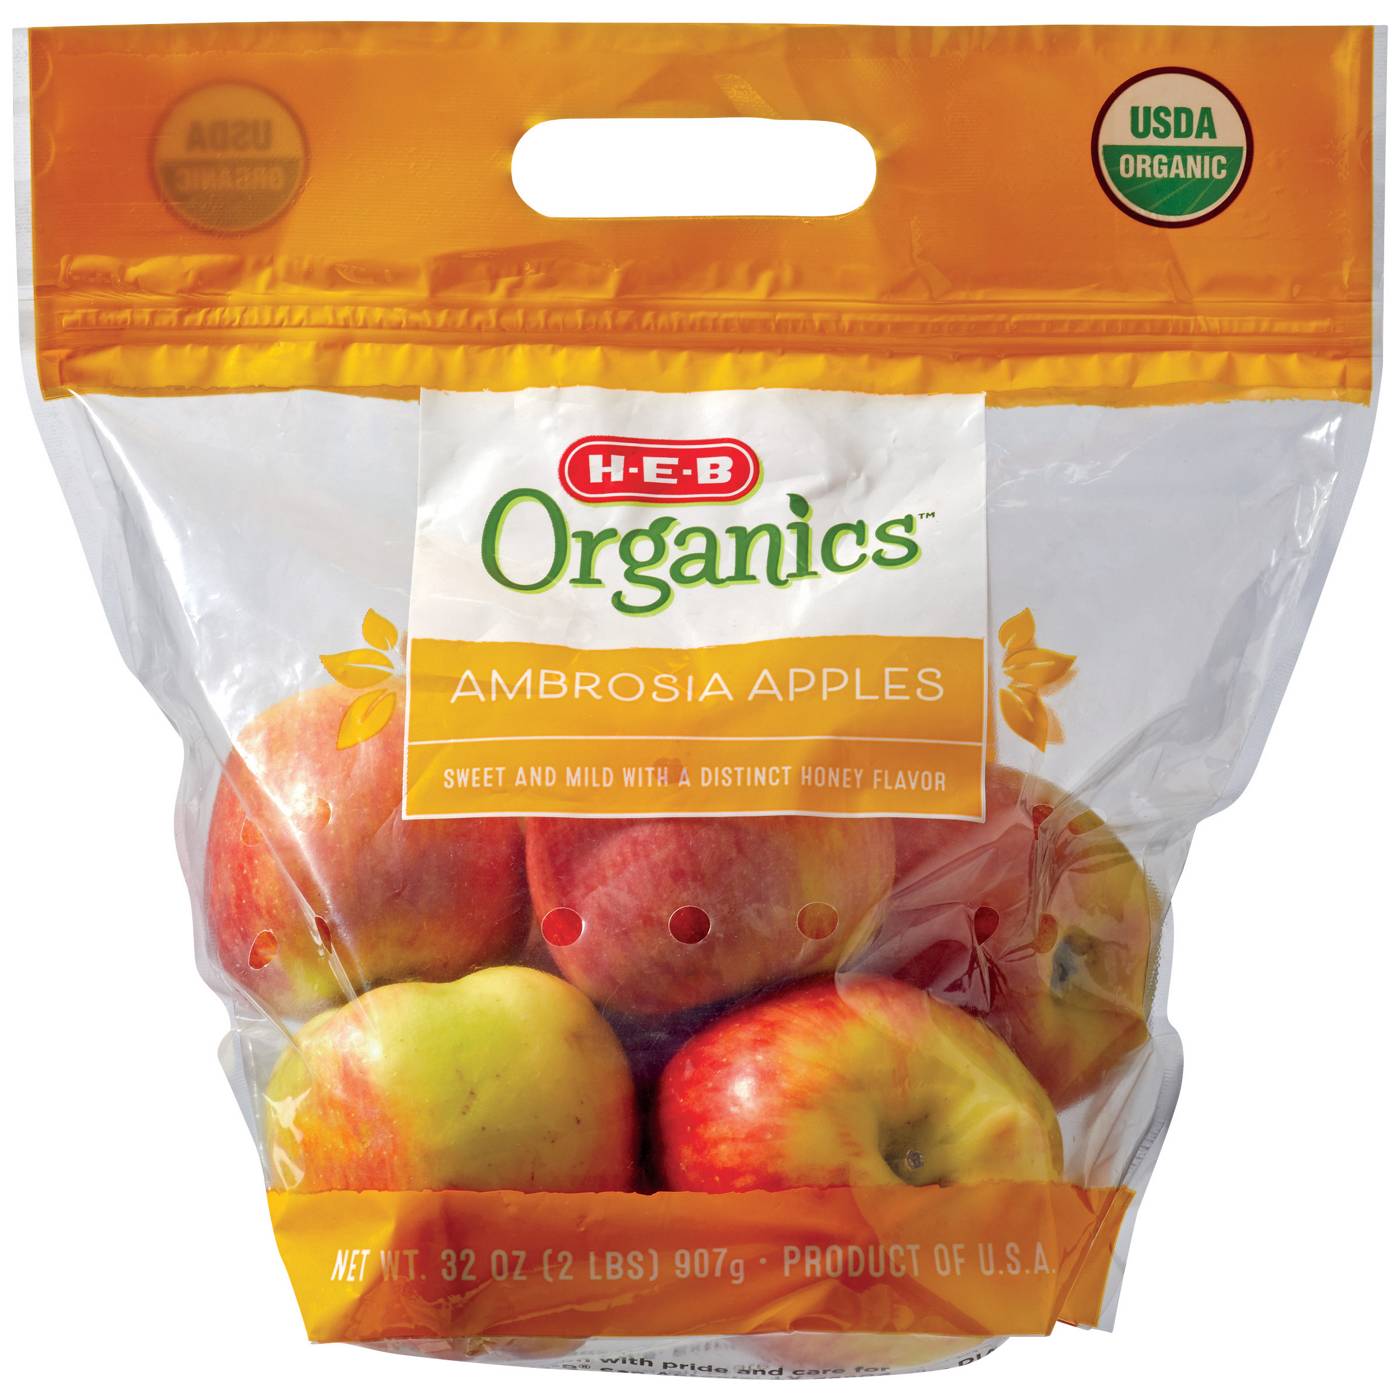 H-E-B Organics Fresh Ambrosia Apples; image 1 of 2